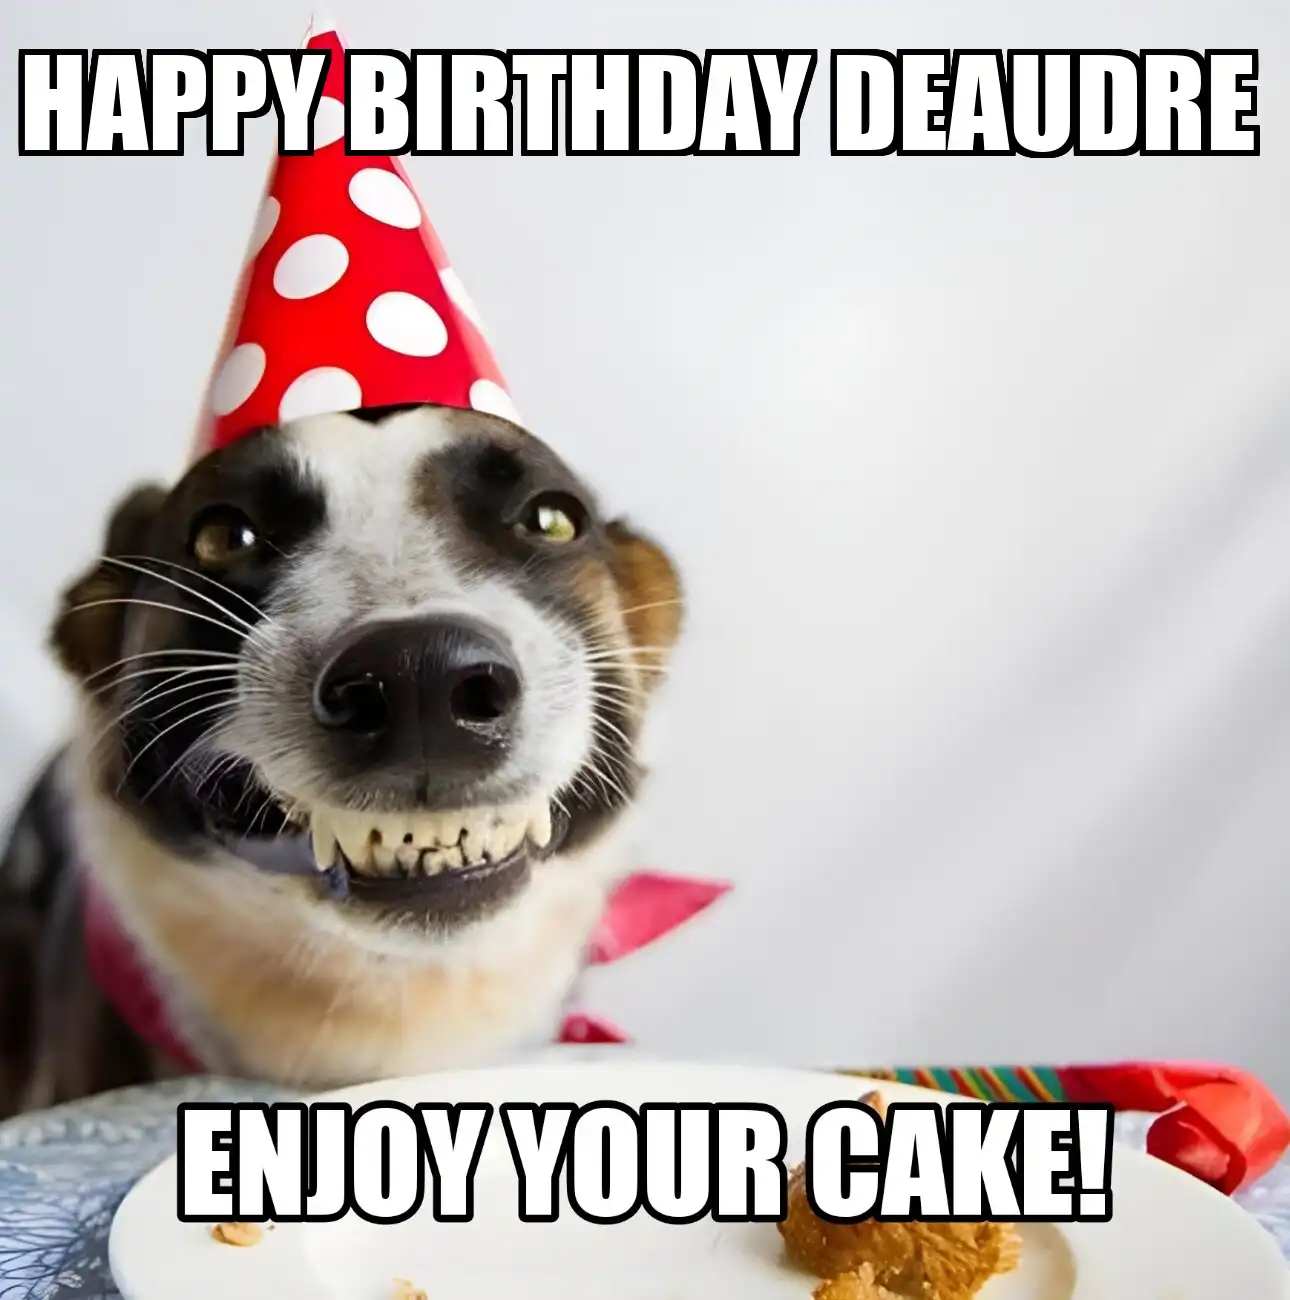 Happy Birthday Deaudre Enjoy Your Cake Dog Meme